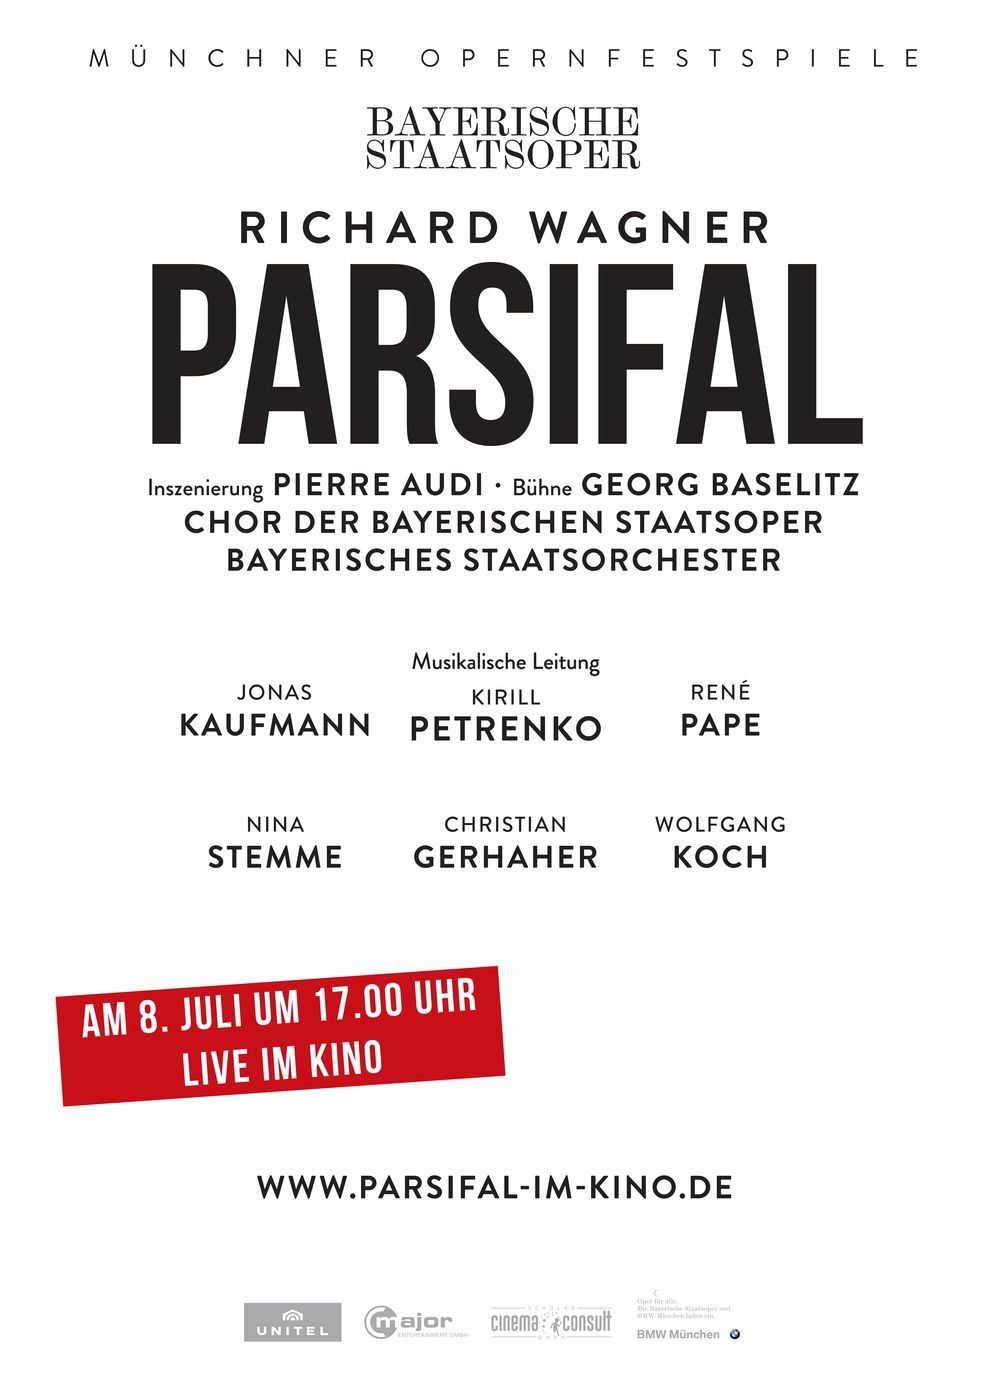 Parsifal - Bayerische Staatsoper 2018 (Poster)